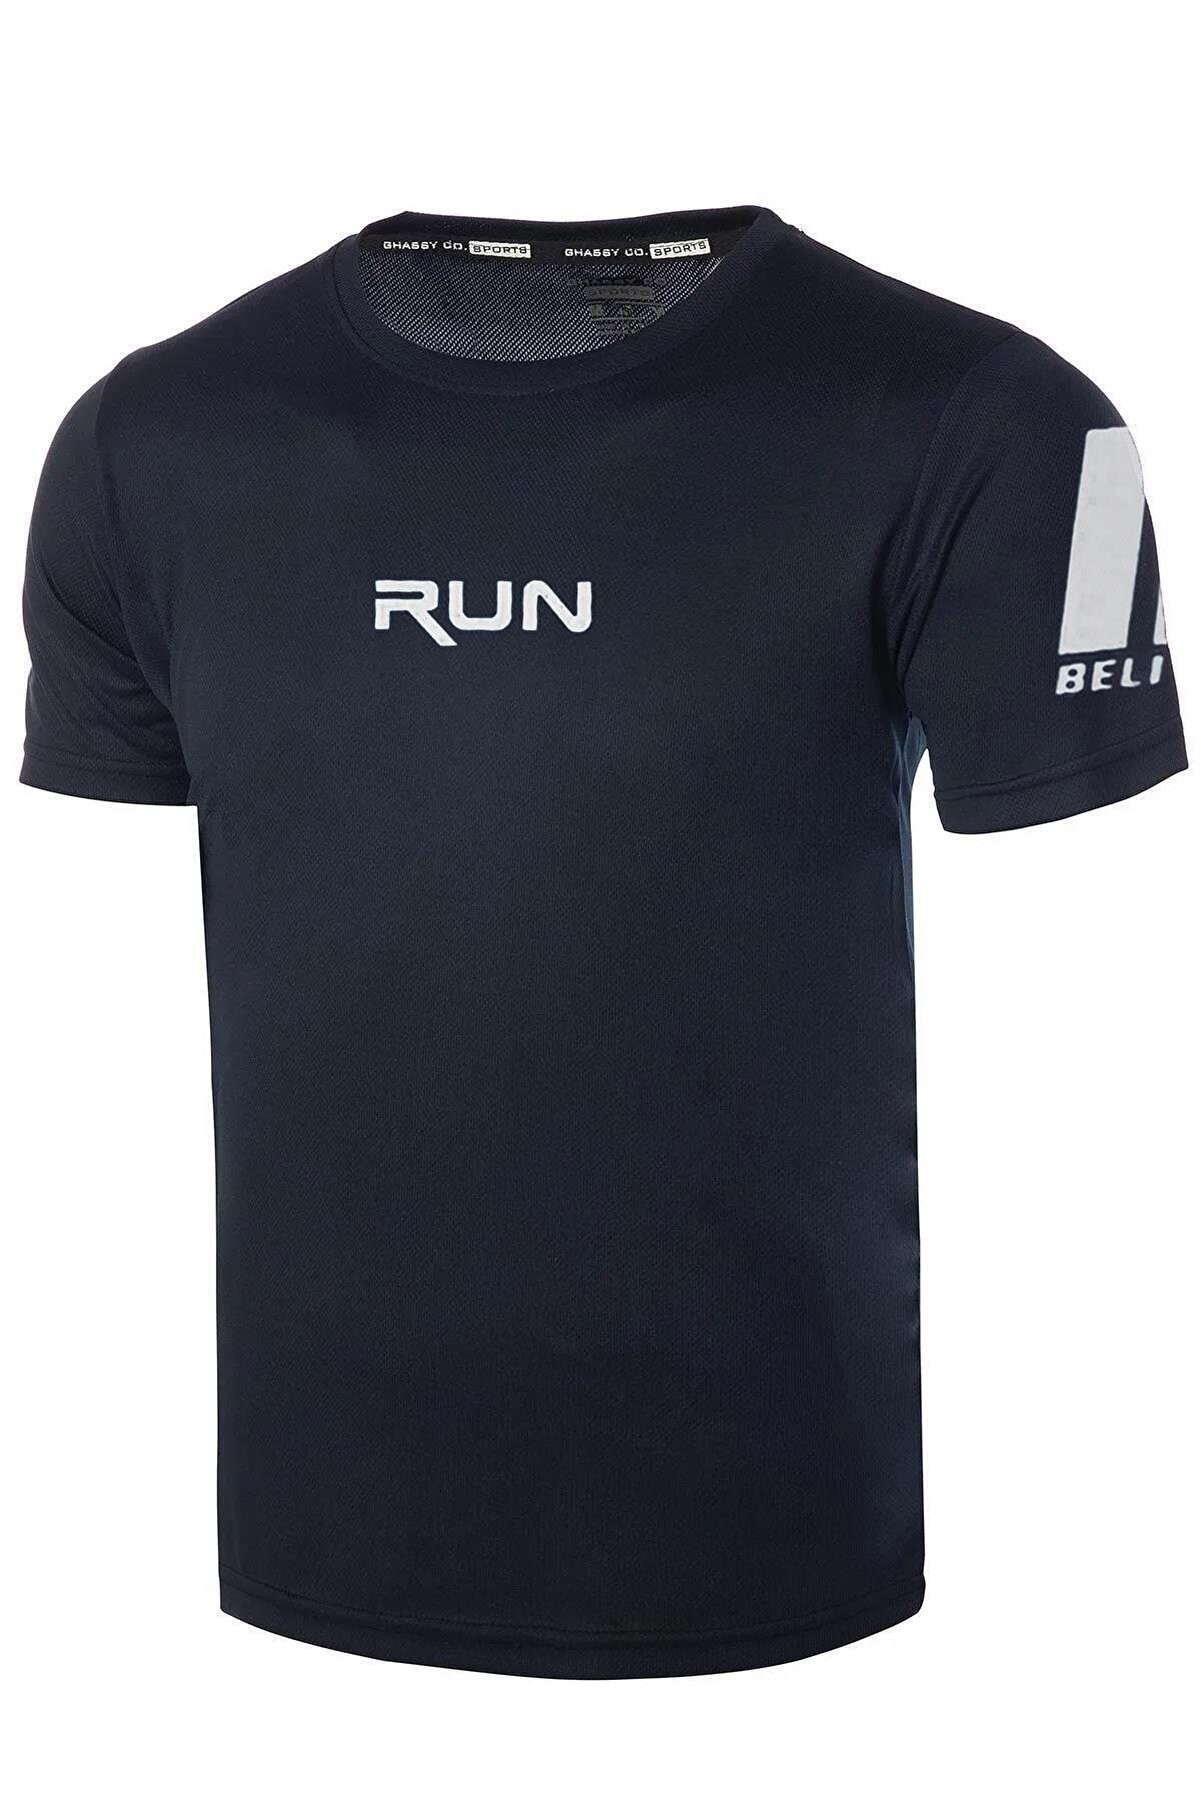 Ghassy Co Ghassy Co. Erkek Nem Emici Hızlı Kuruma Performans Running Spor T-shirt - Lacivert